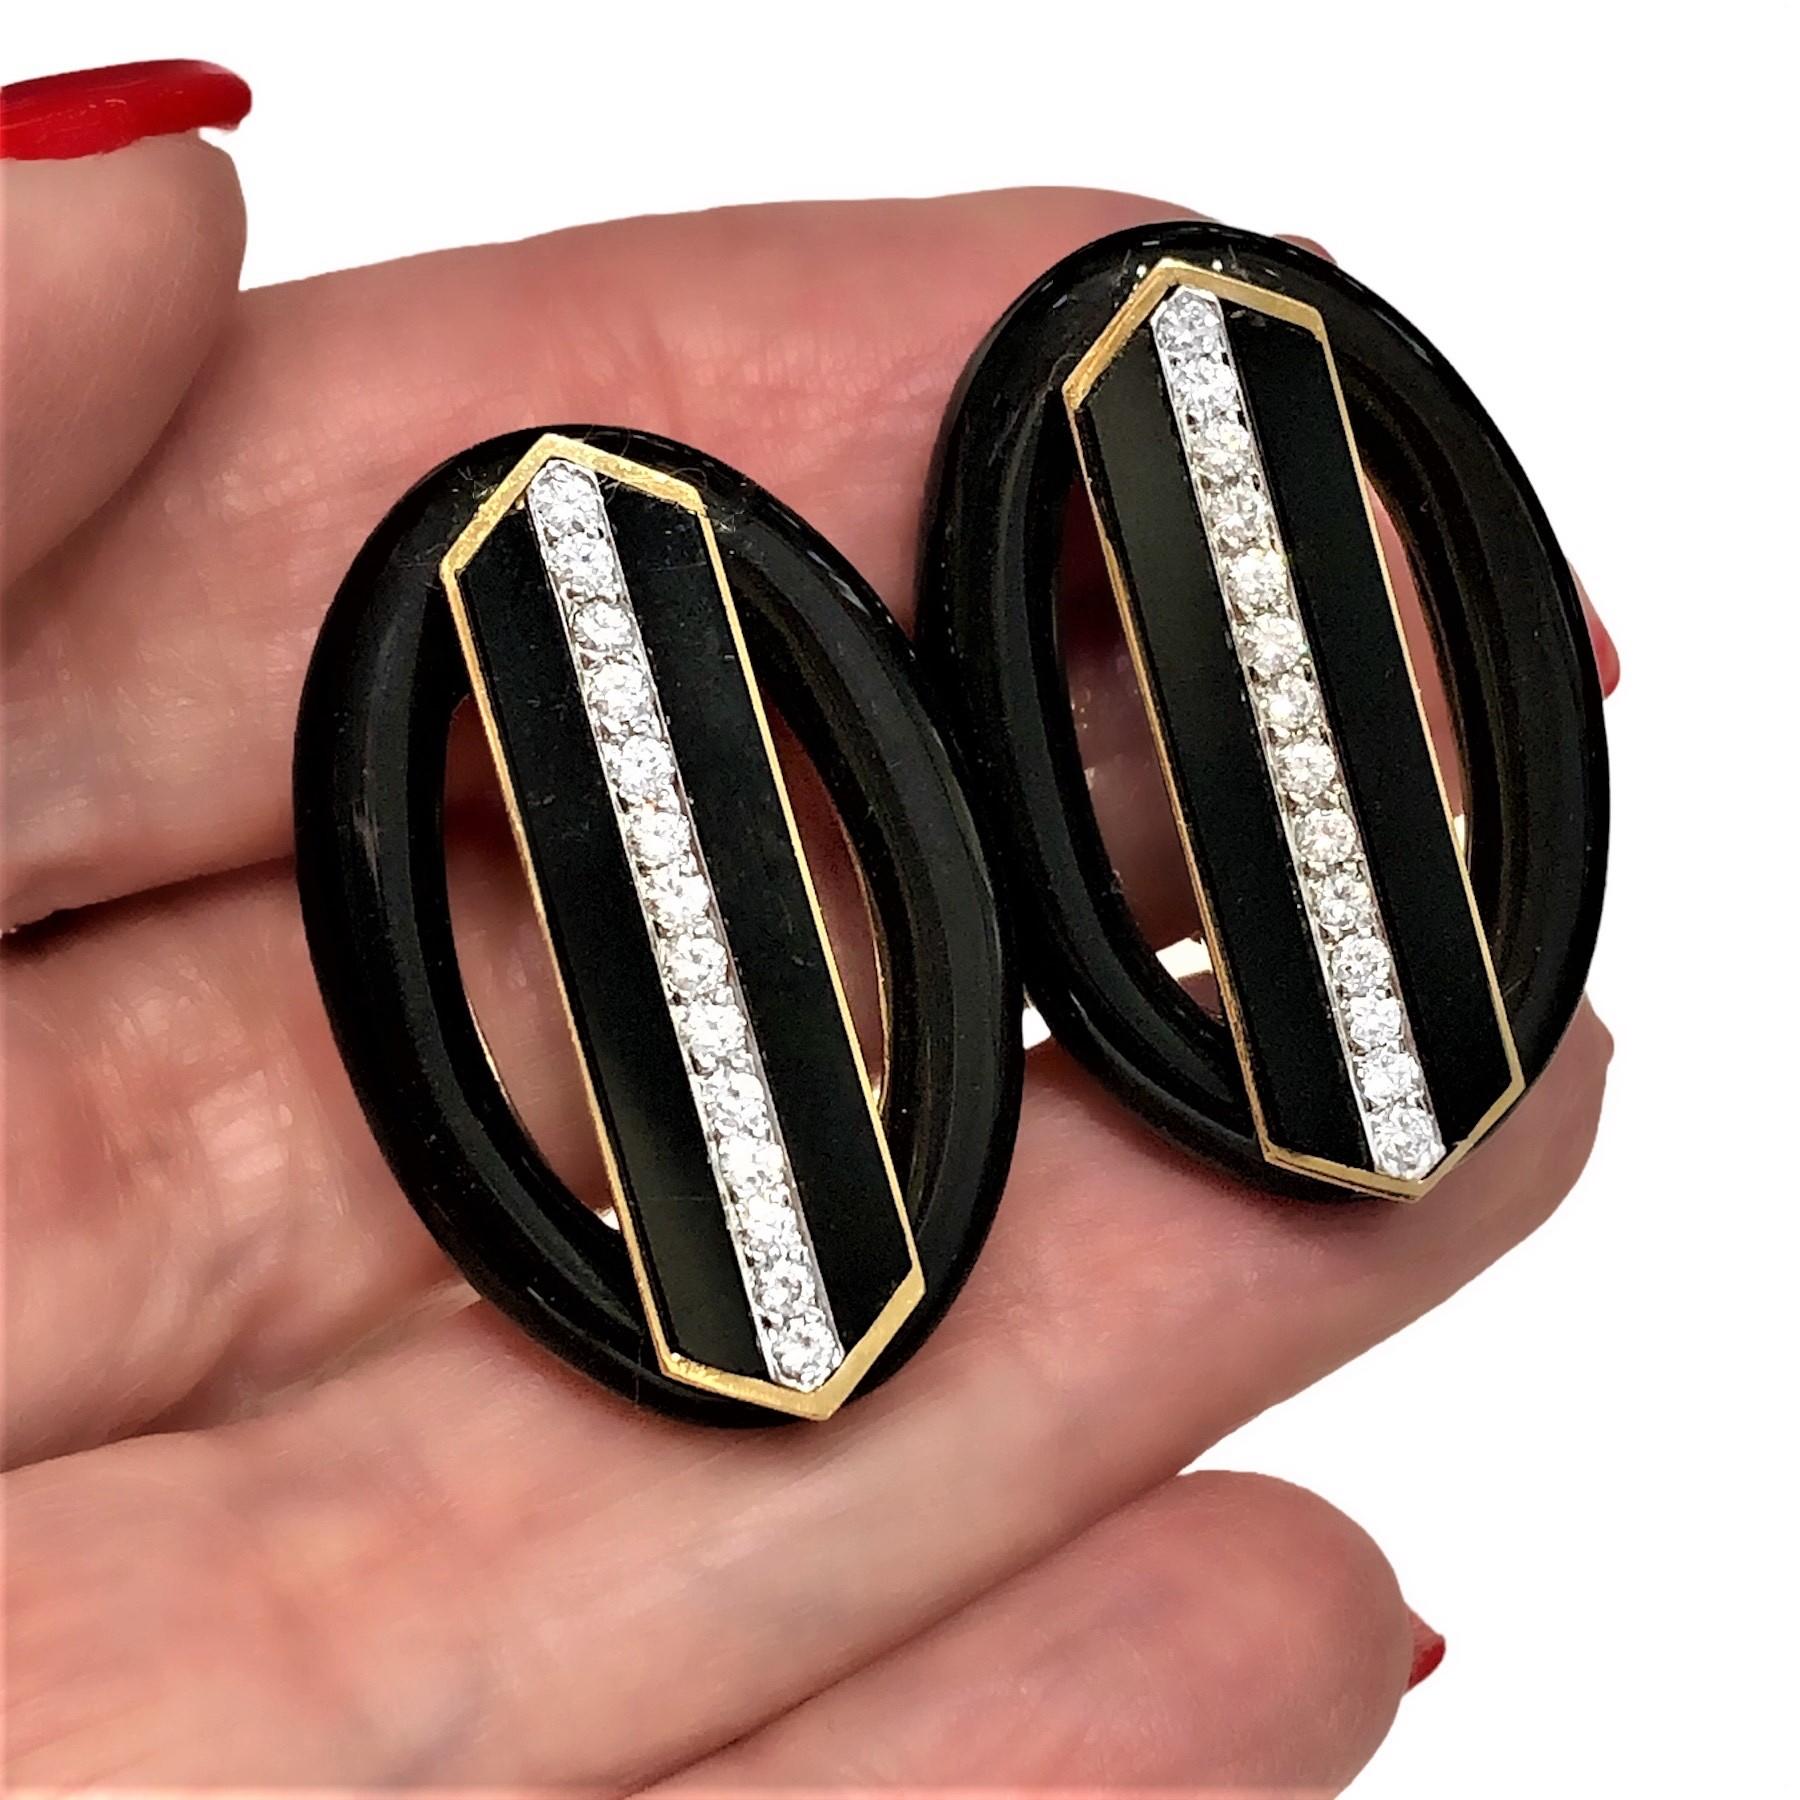 Emis Beros 18k Gold, Black Onyx and Diamond Earrings 2